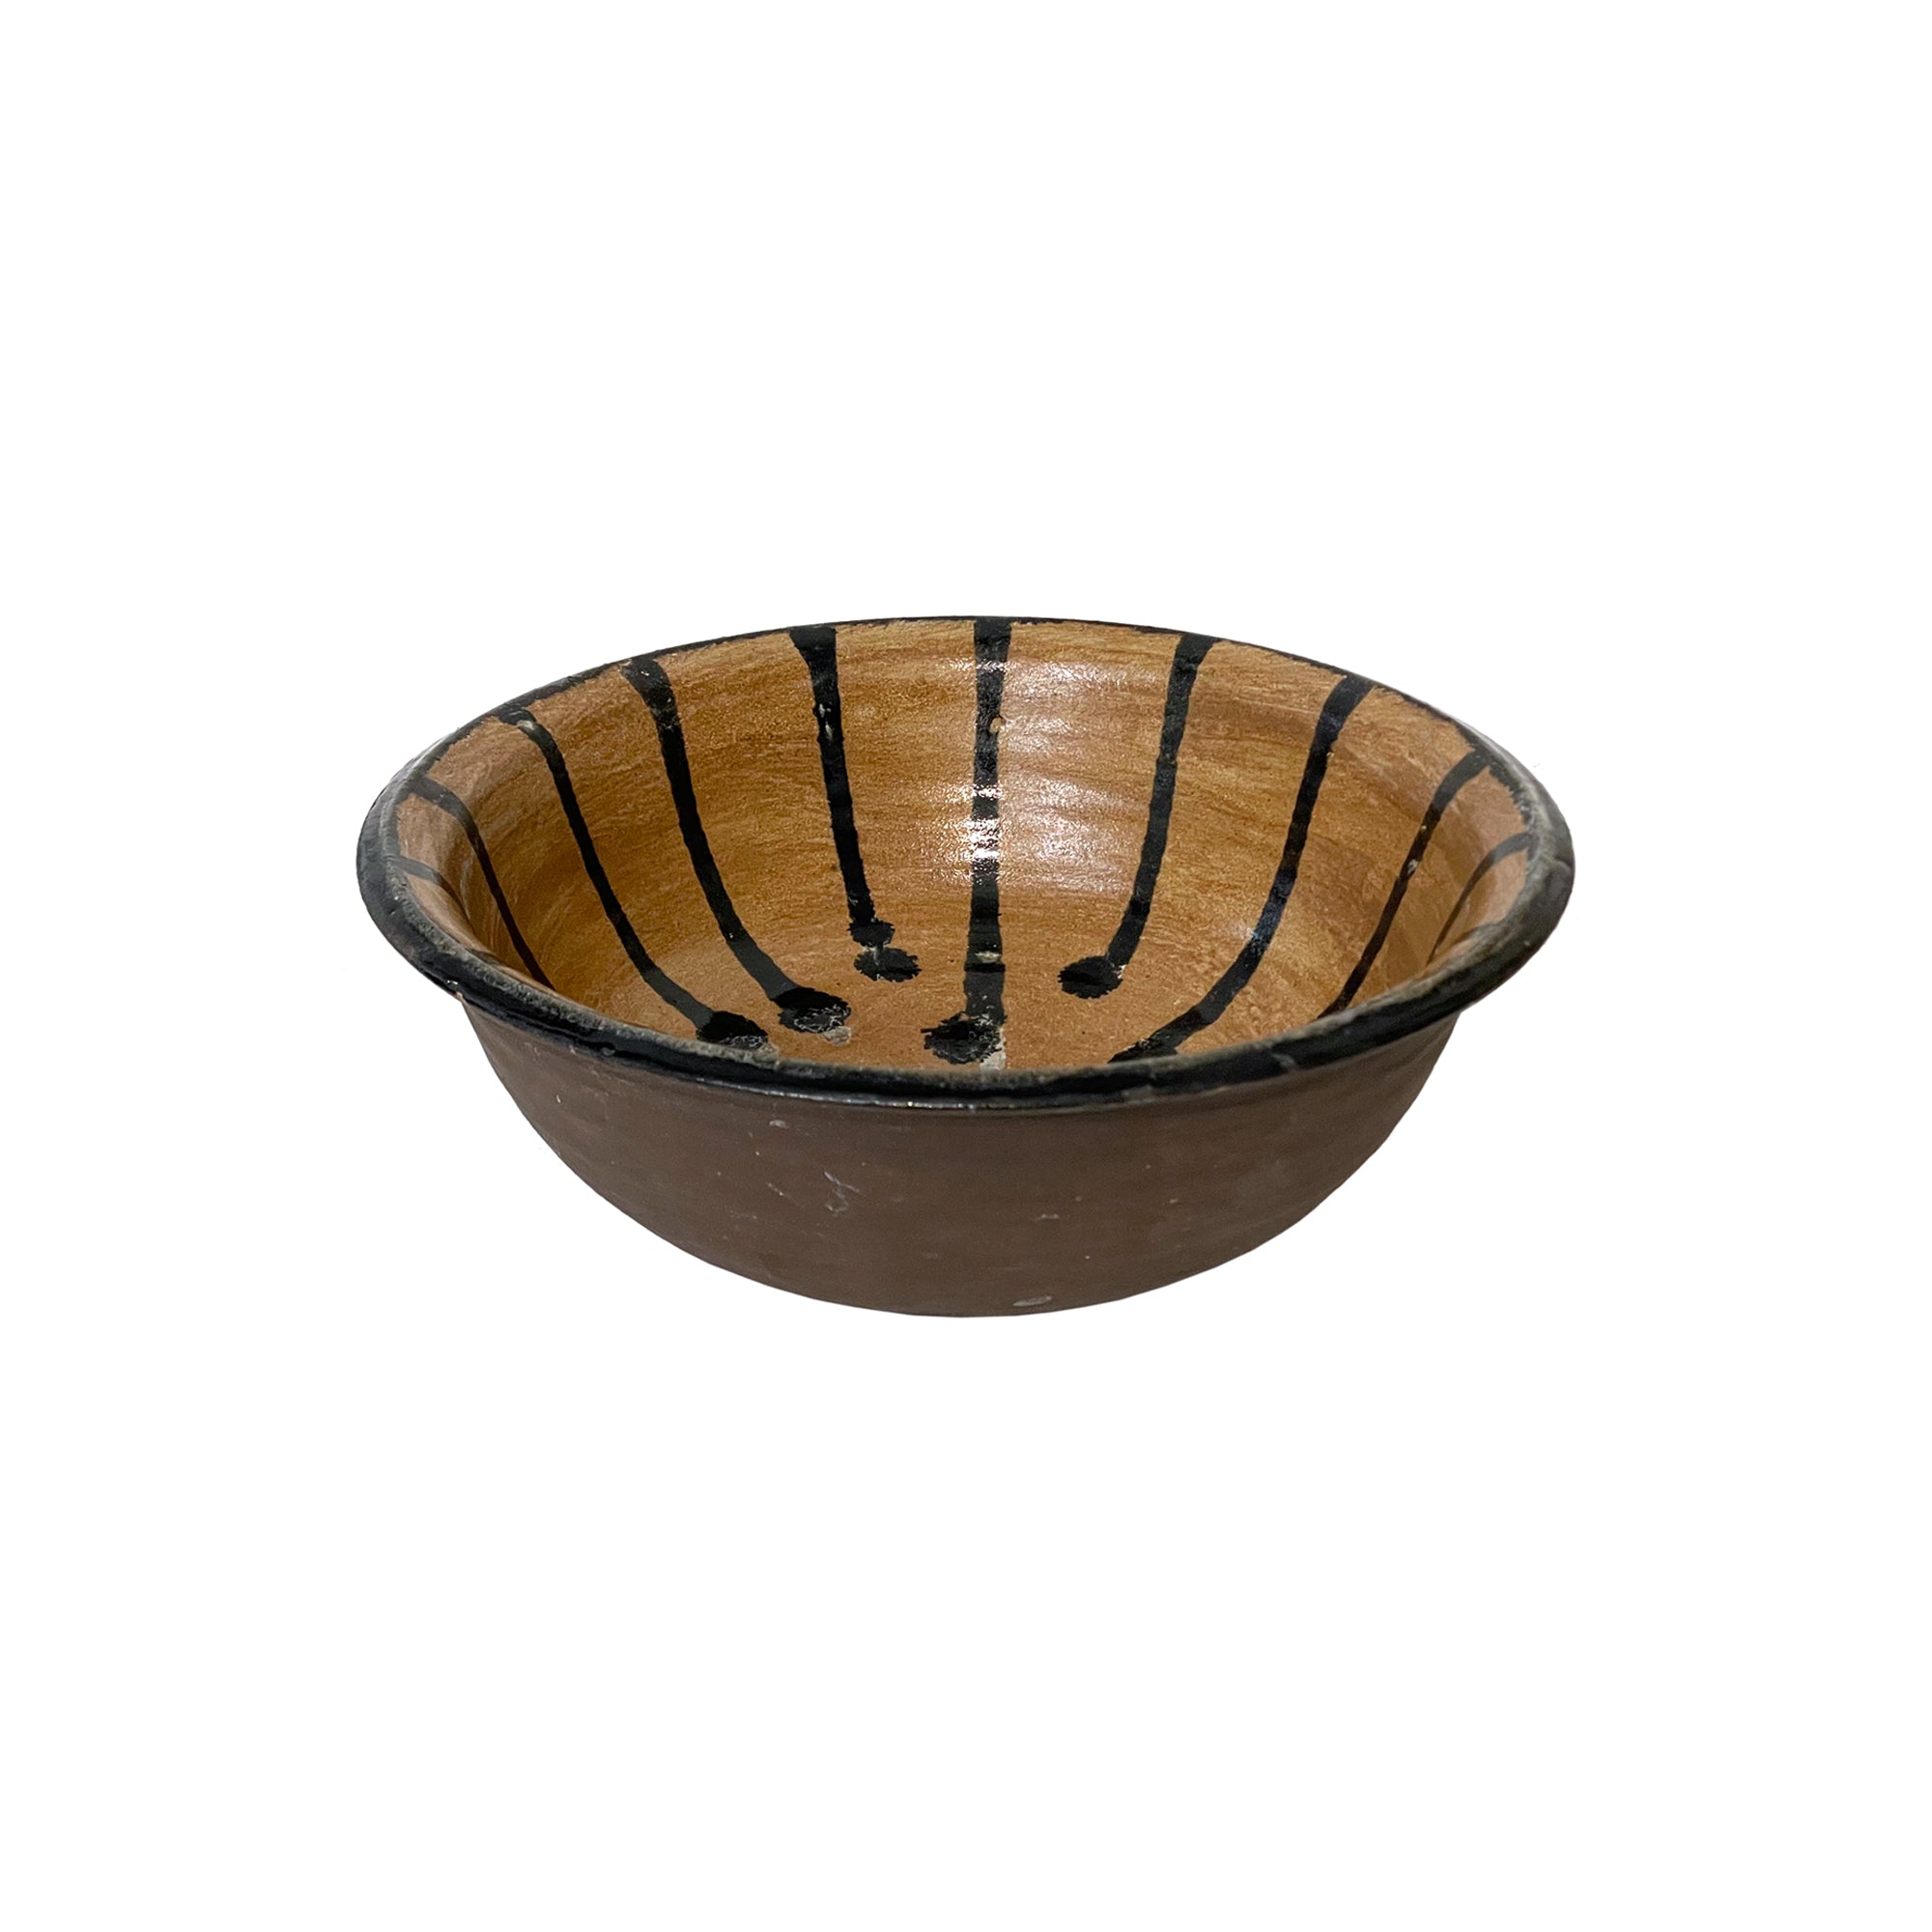 Studio Ceramic Decorative Bowl or Catch-All